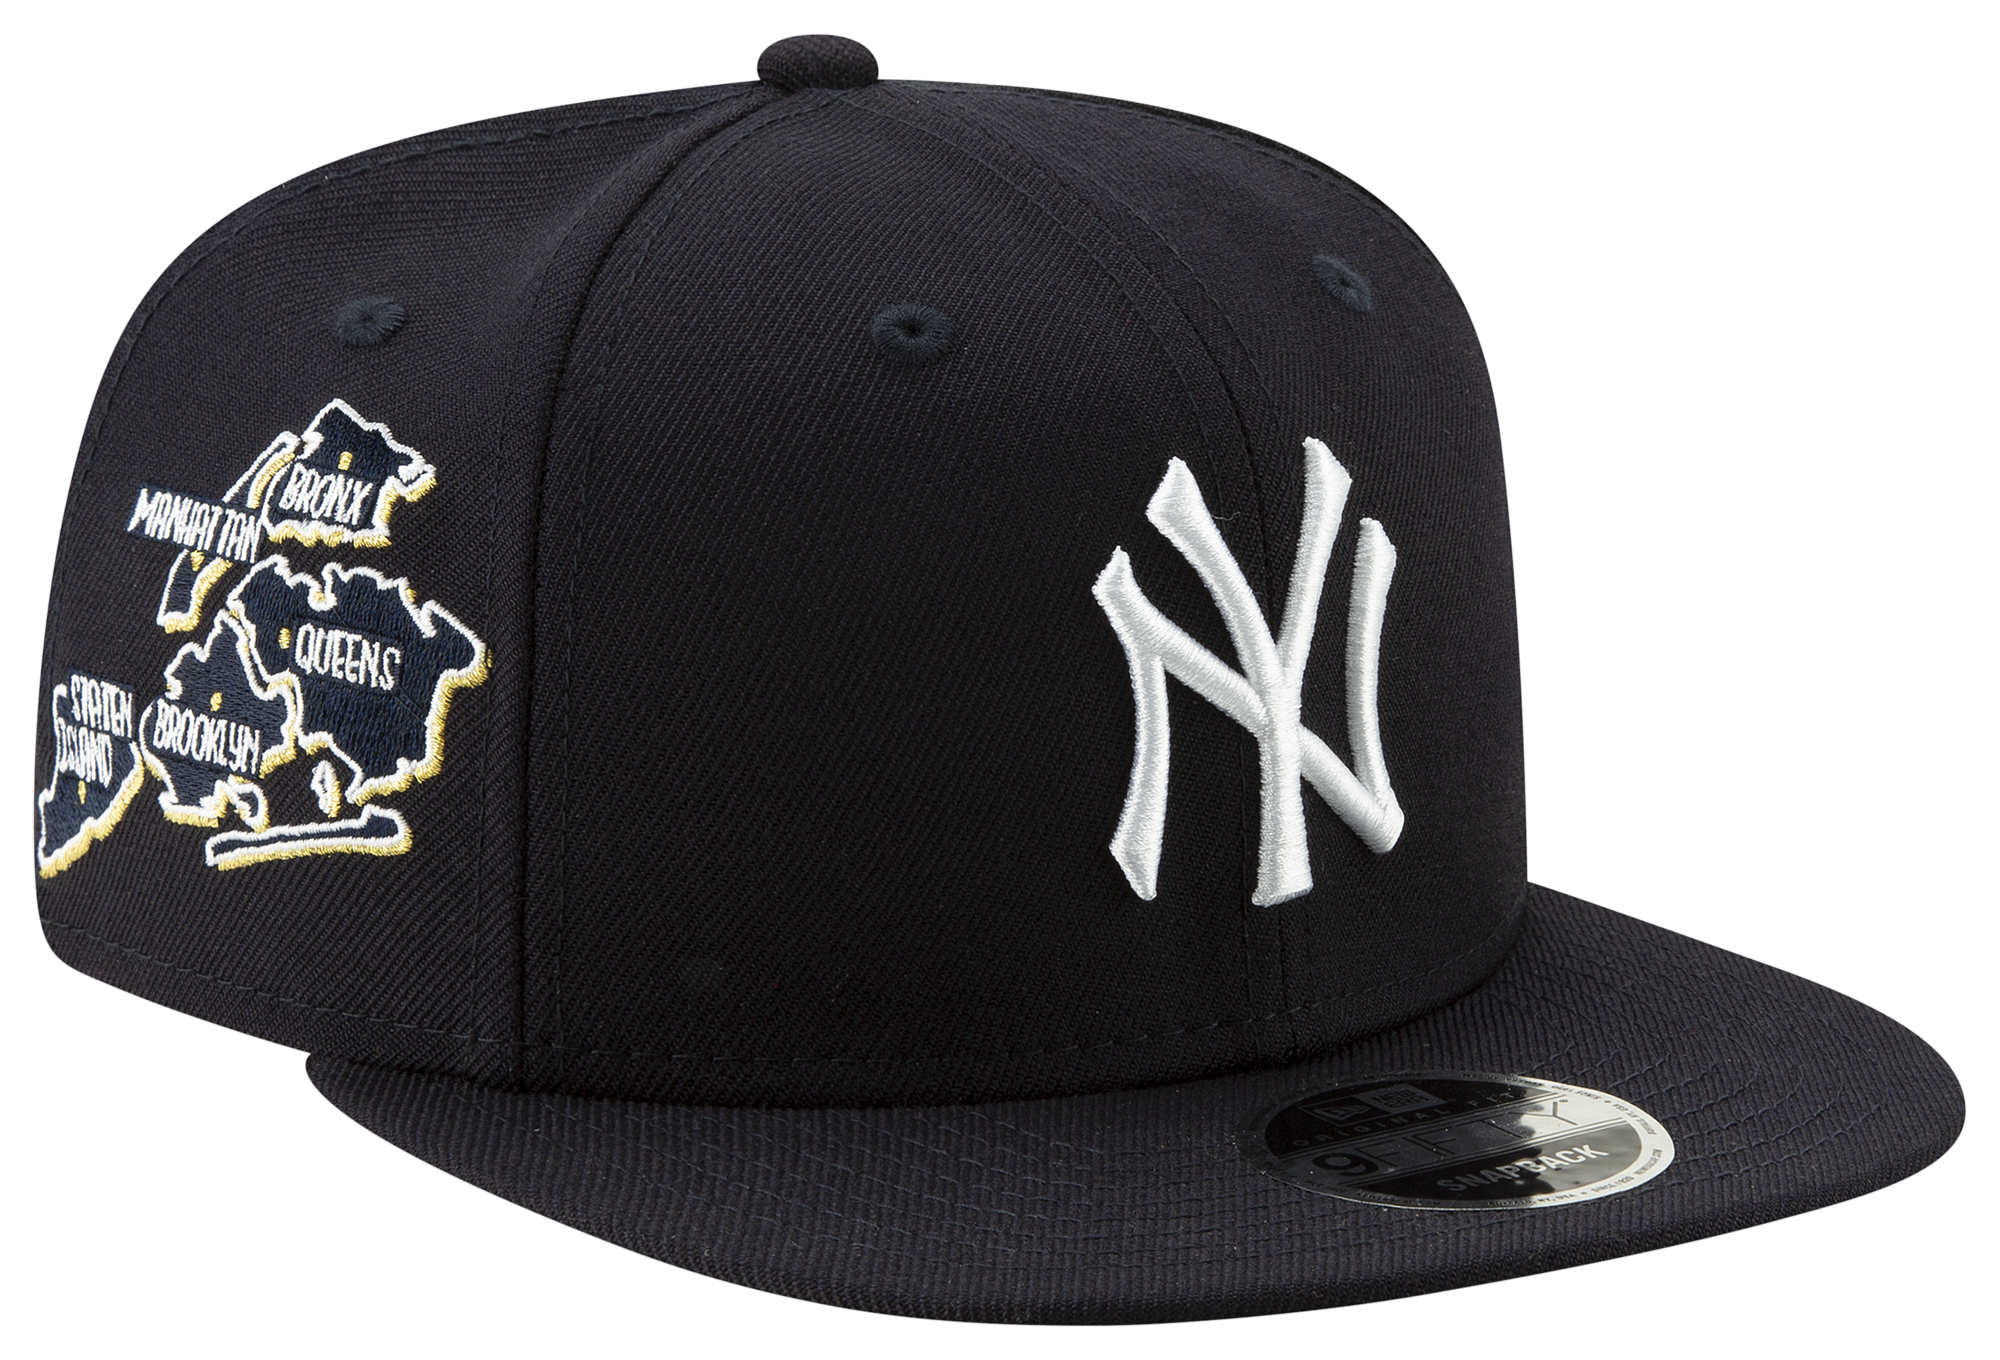 New Era Yankees 9Fifty Icon Snapback Cap